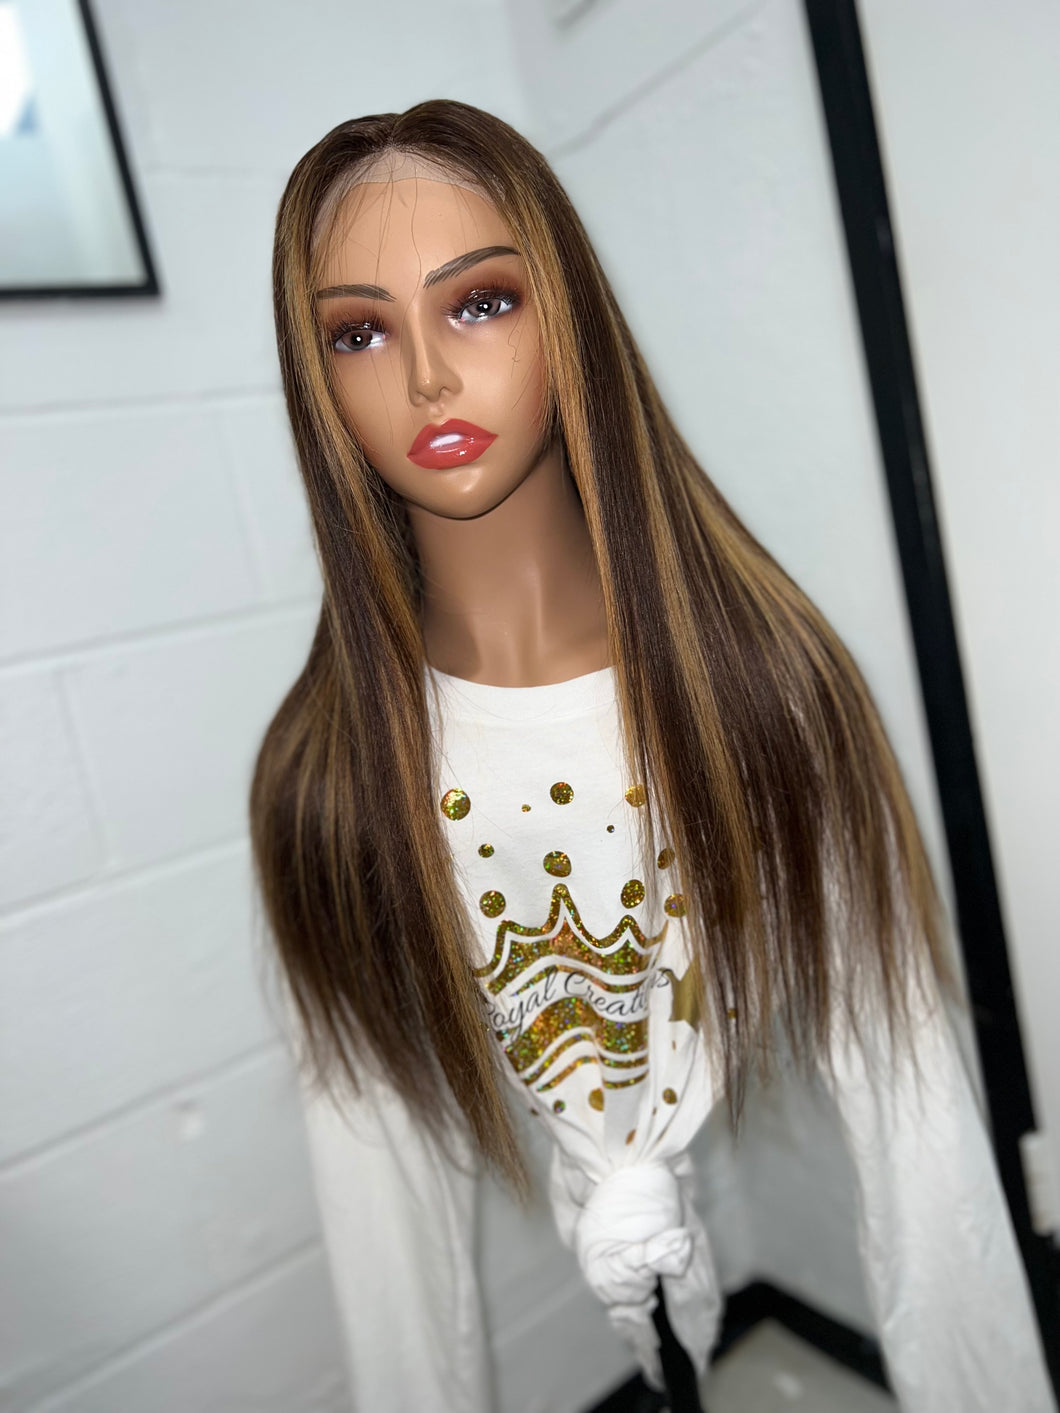 Brown/ Blonde highlight wig - In Store Pickup